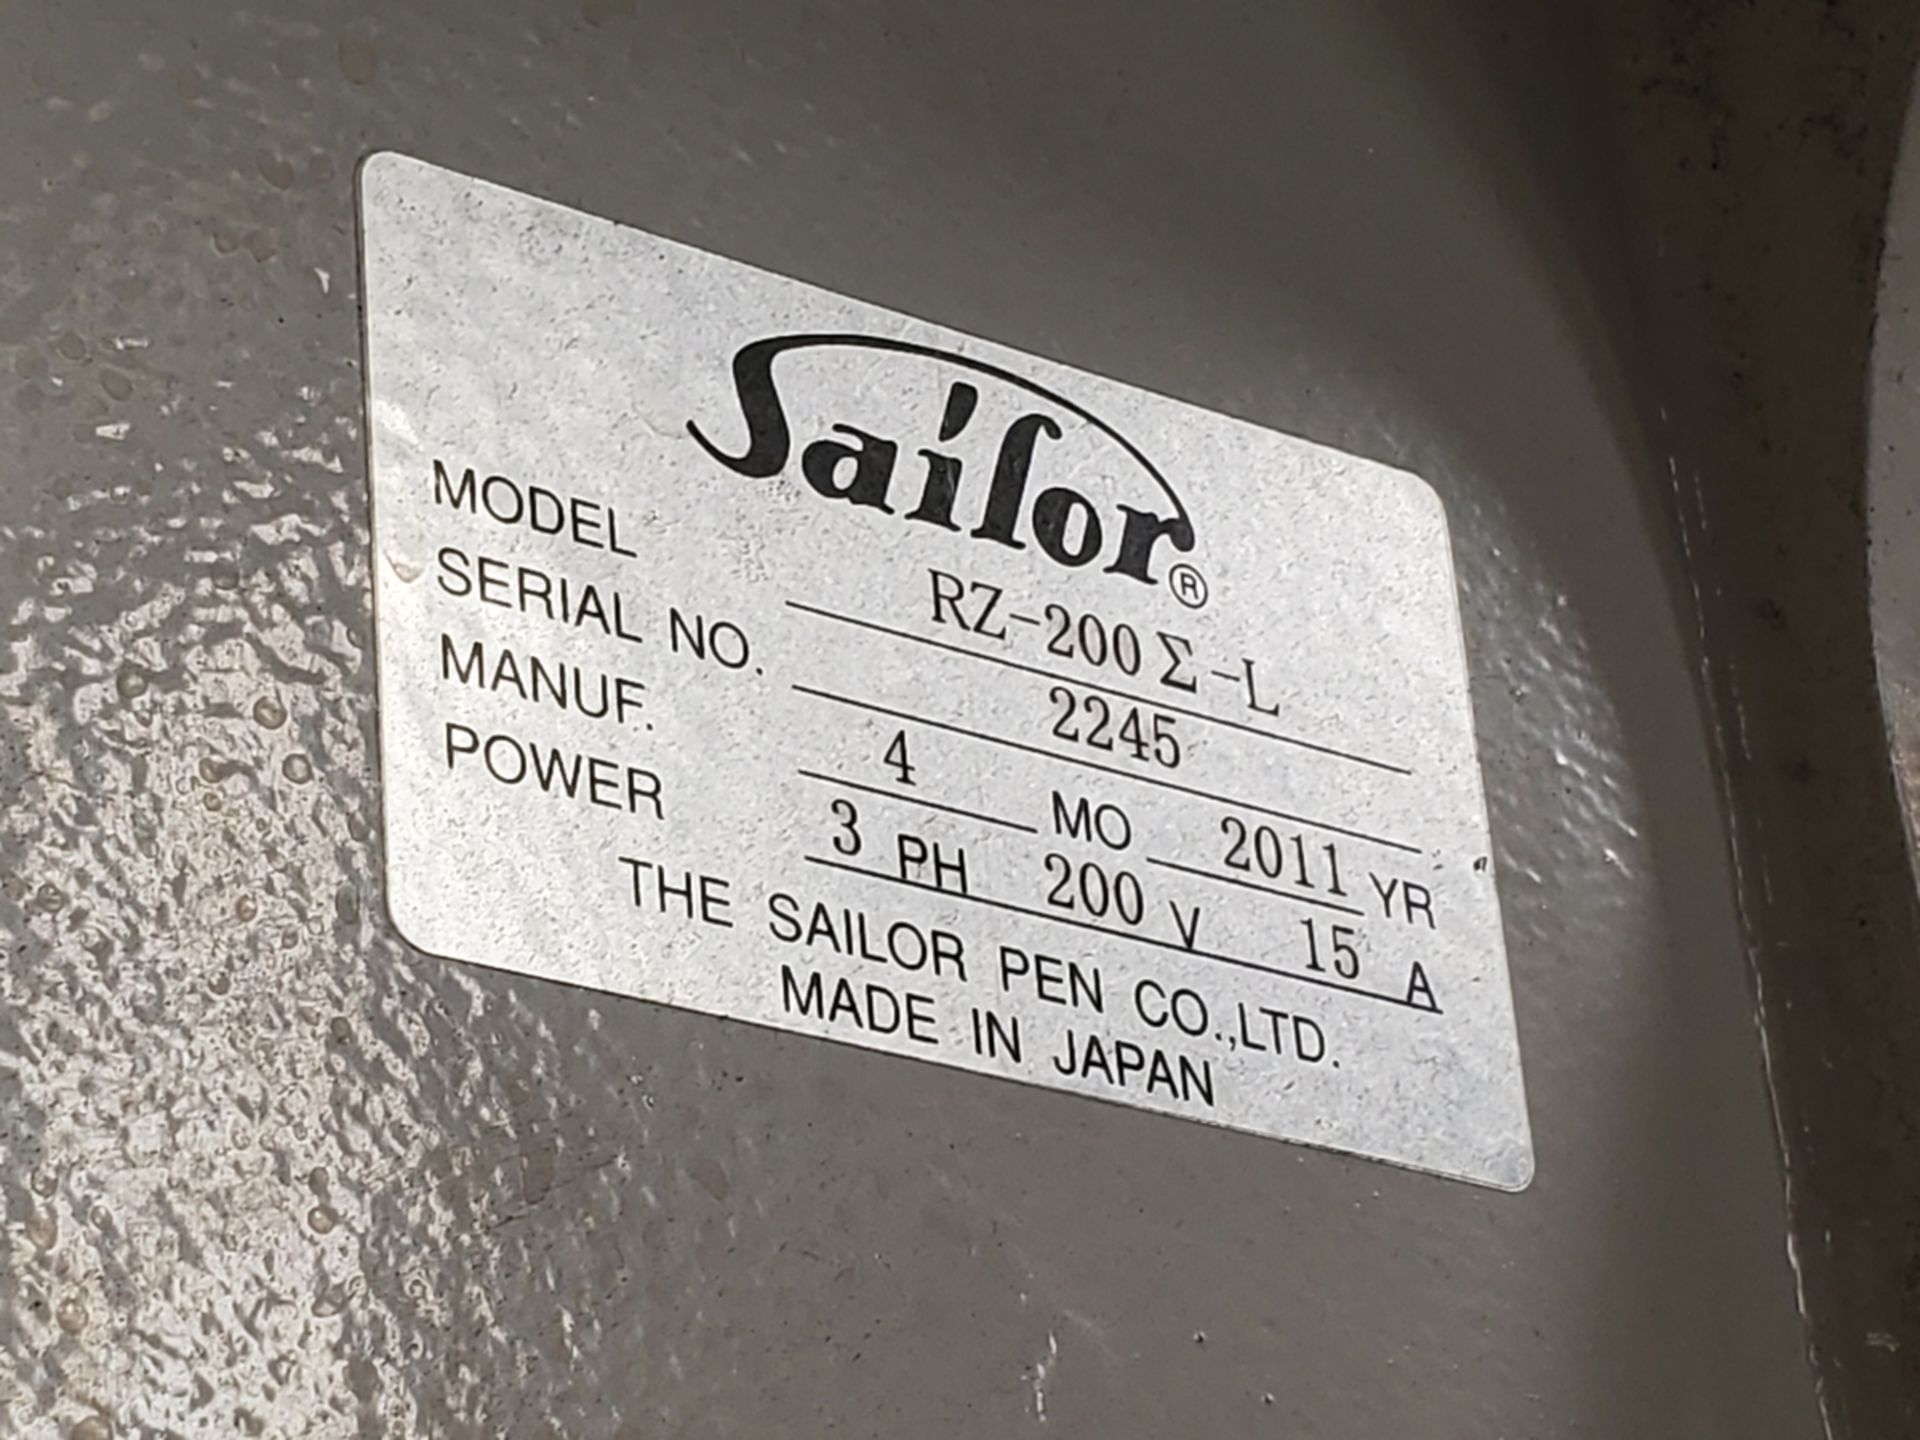 Sailor RZ-200 SIGMA-L Unloading Robot - Image 8 of 8